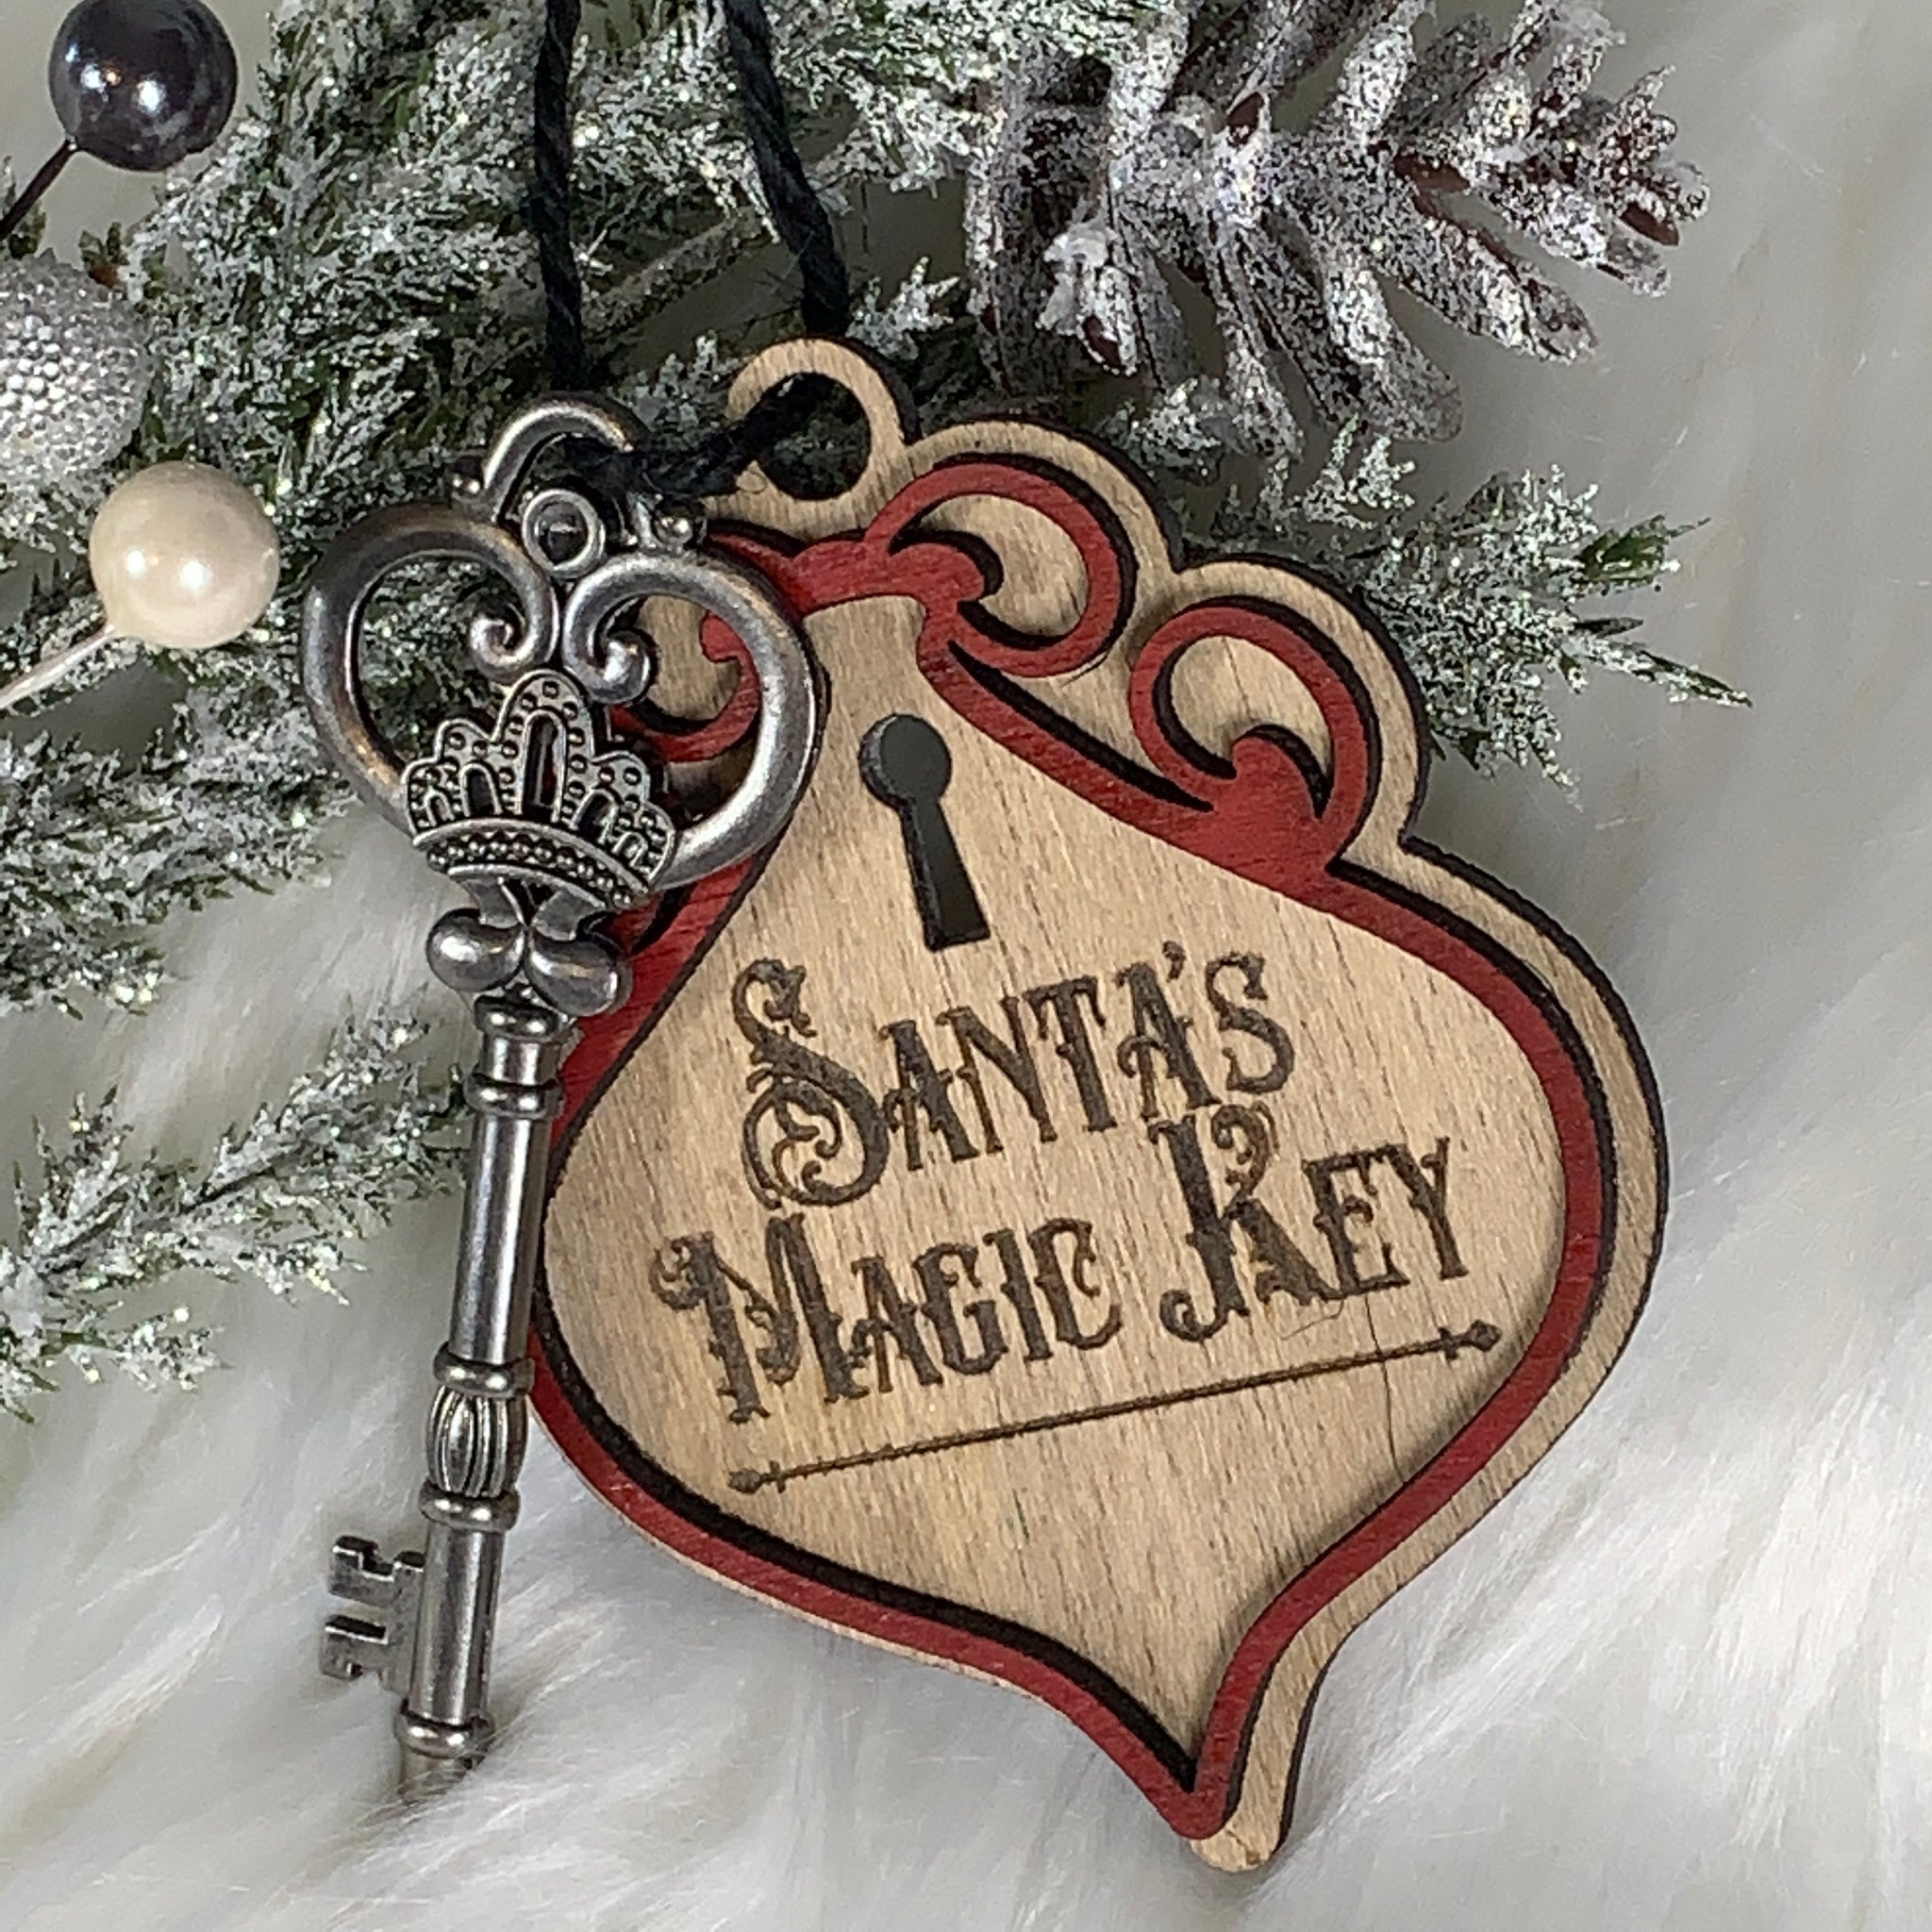 Santa's Magic Personalized Key